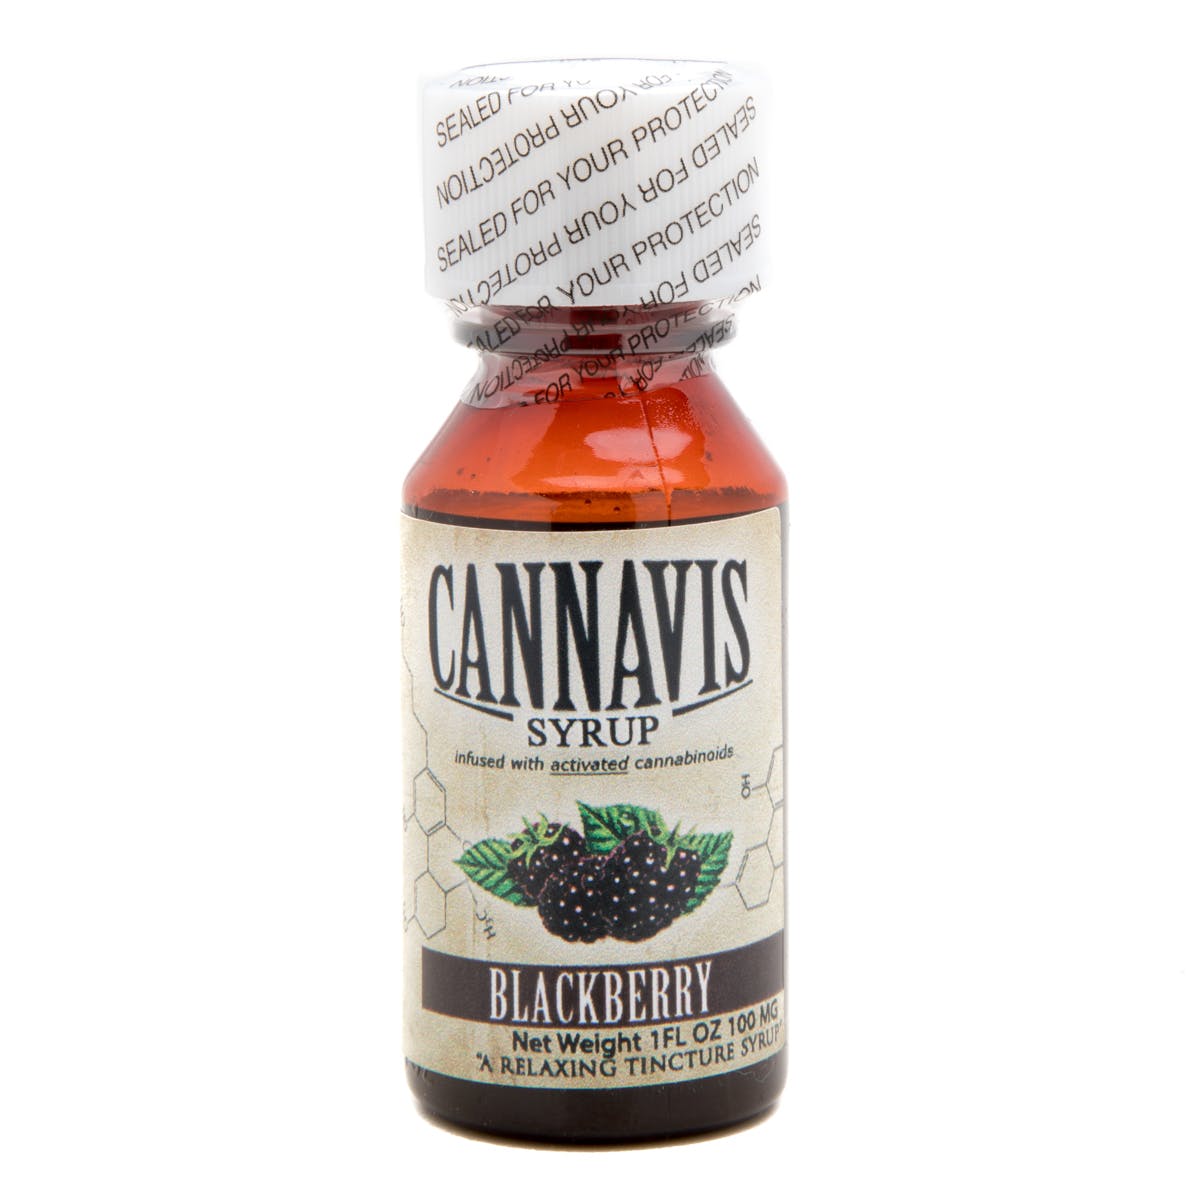 marijuana-dispensaries-organic-solutions-whittier-in-whittier-cannavis-syrup-2c-blackberry-100mg